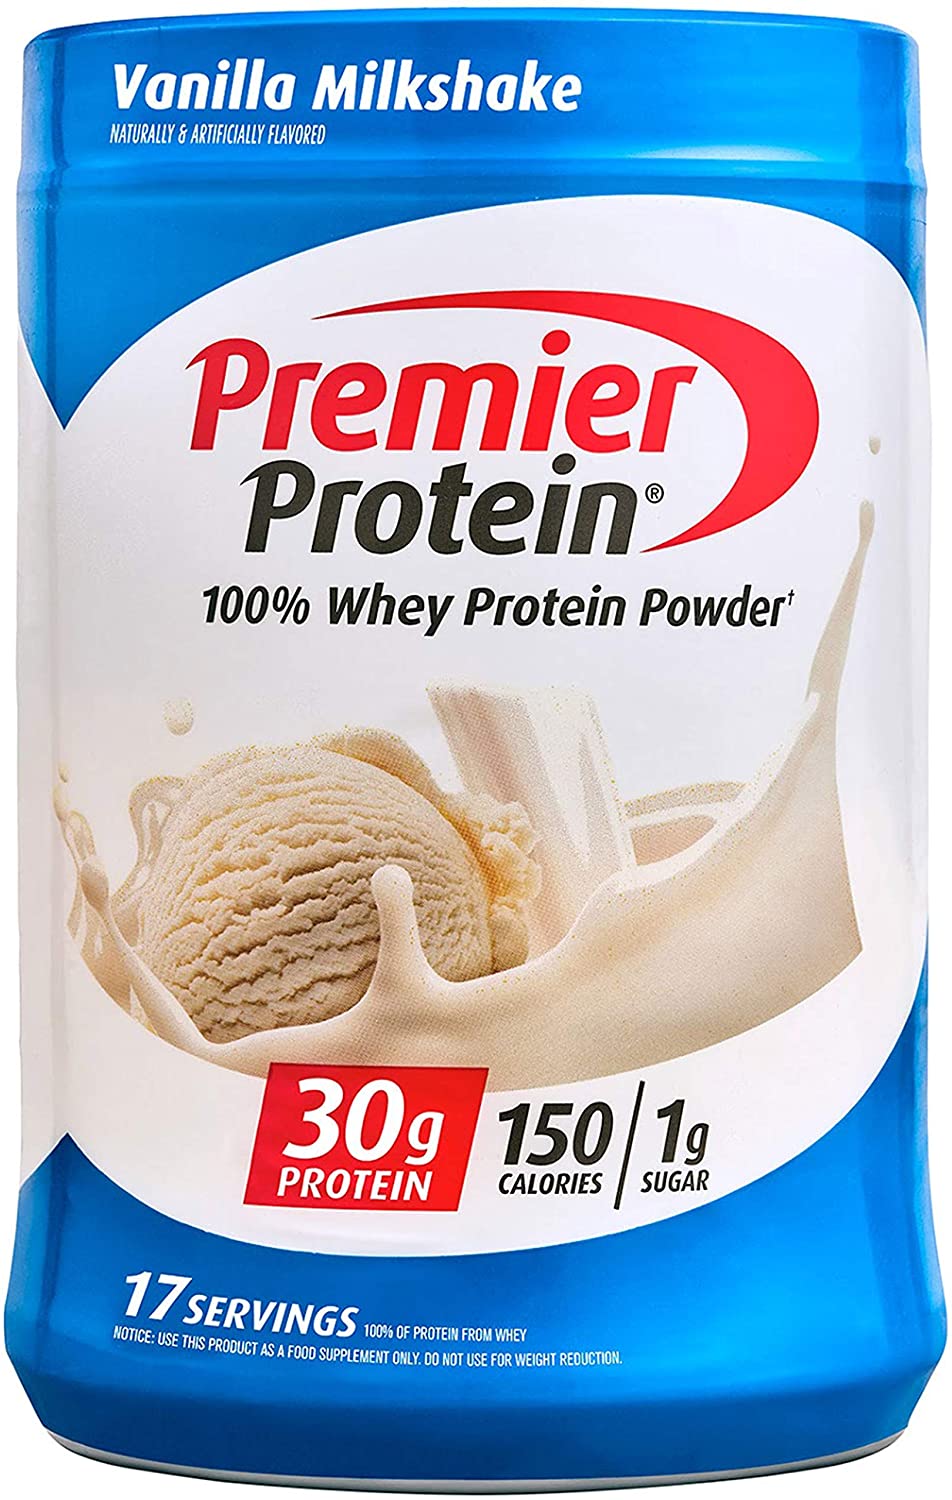 Premier Protein Powder, Vanilla Milkshake, 30g Protein, 1g Sugar, 100% Whey Protein, Keto Friendly